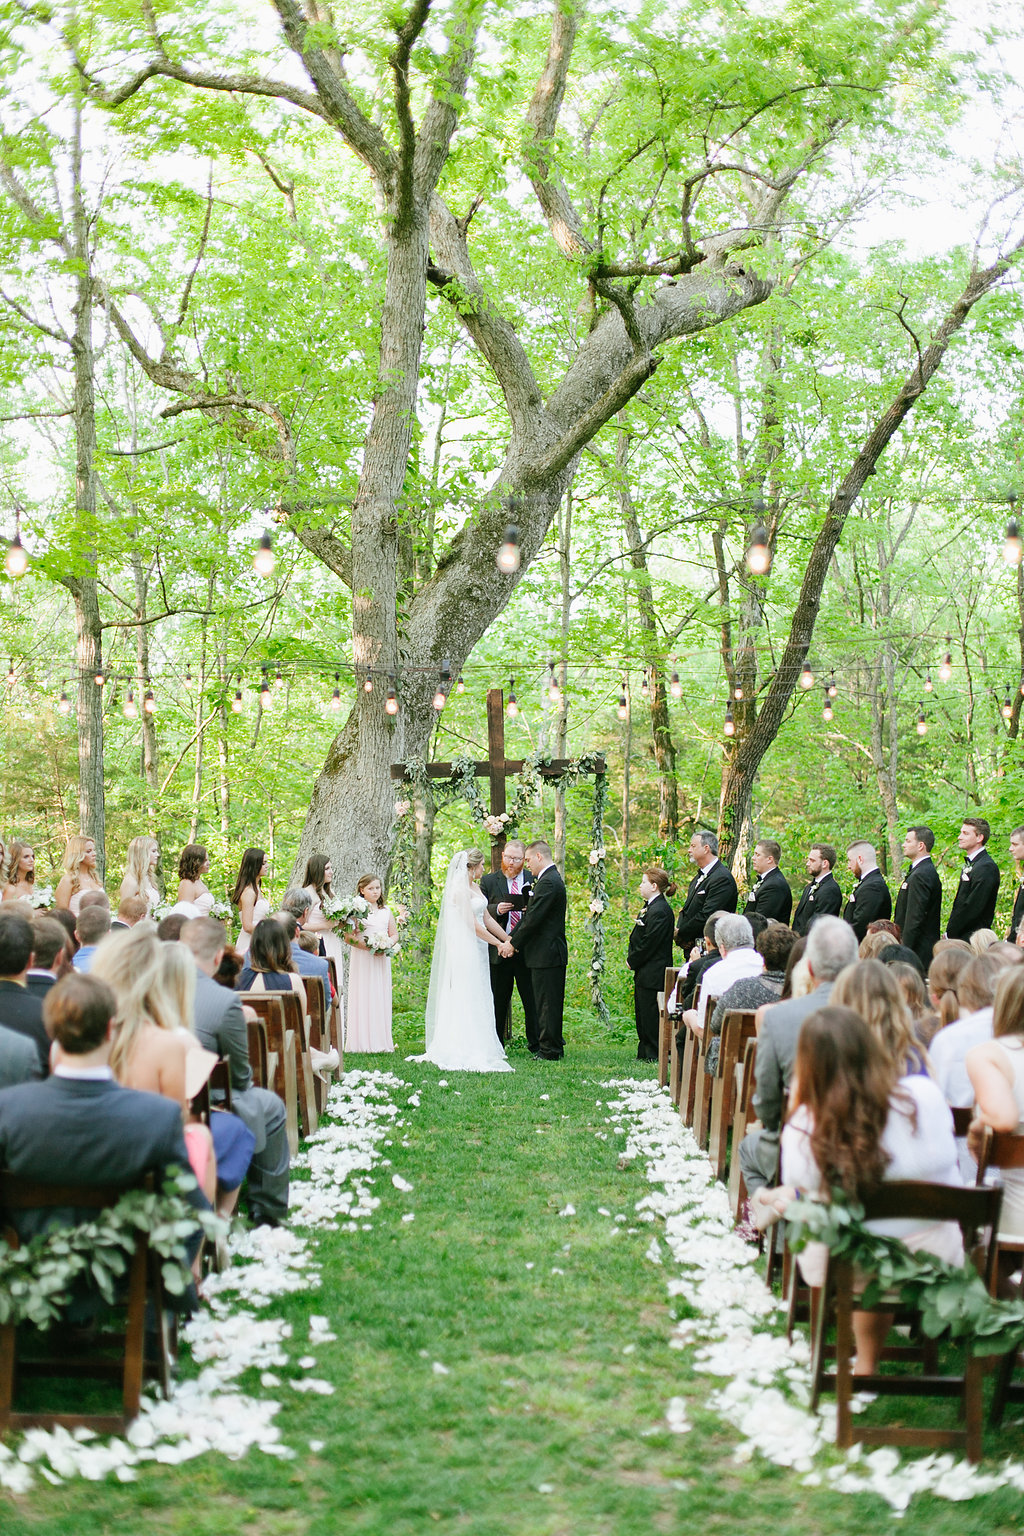 www.modernvintageevents.com, The Wren's Nest, Southern Wedding, Barn Wedding, Nashville Wedding Planner